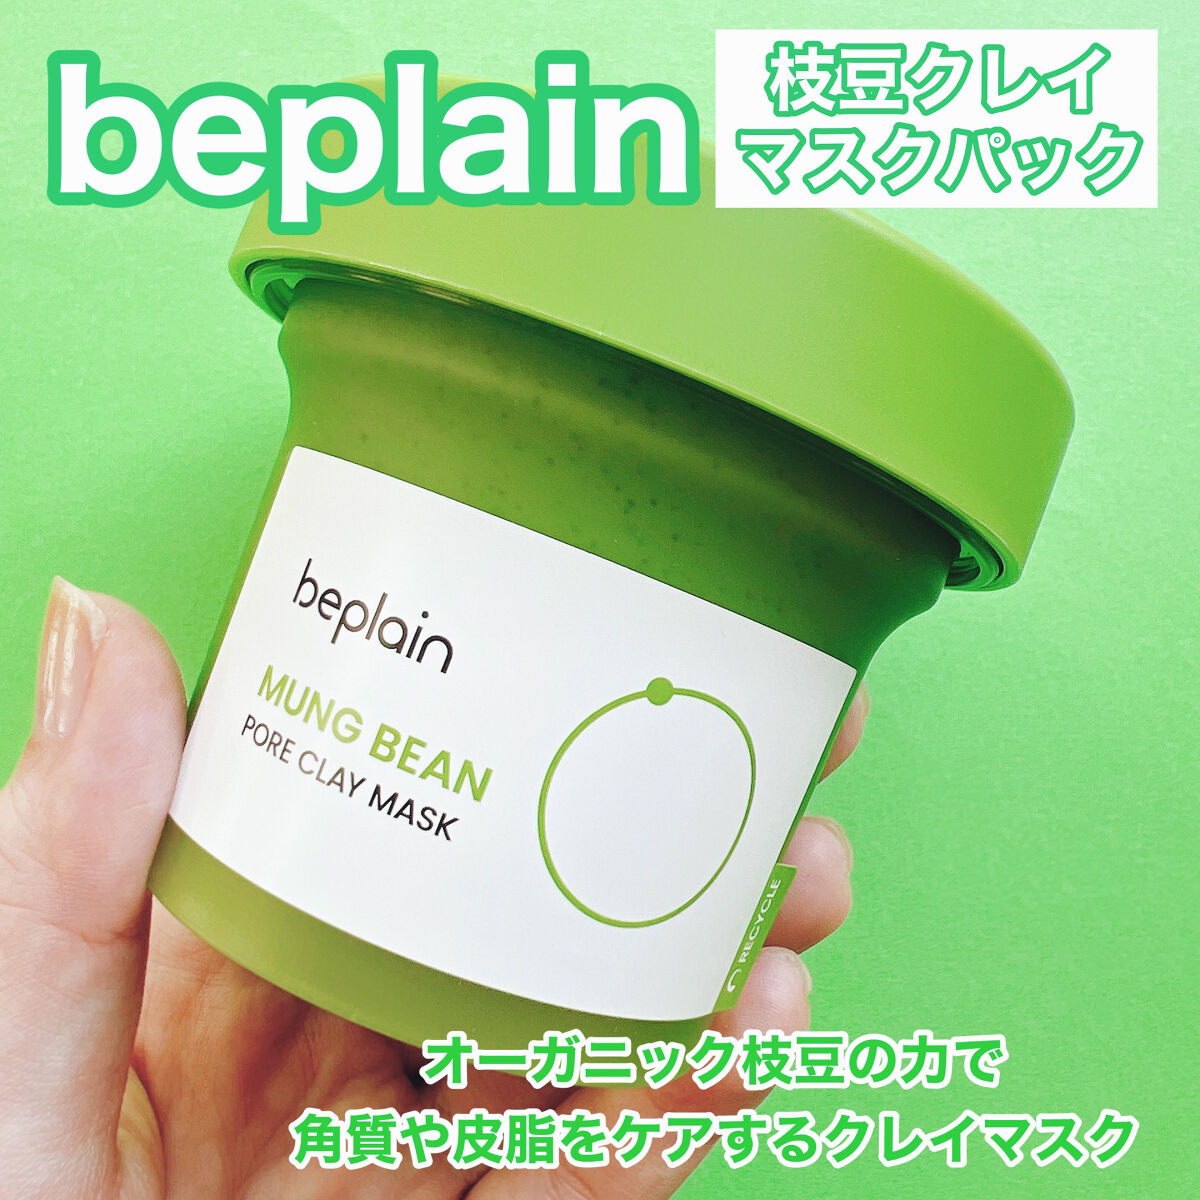 beplain 緑豆ポアクレイマスクパック 120ml - 基礎化粧品